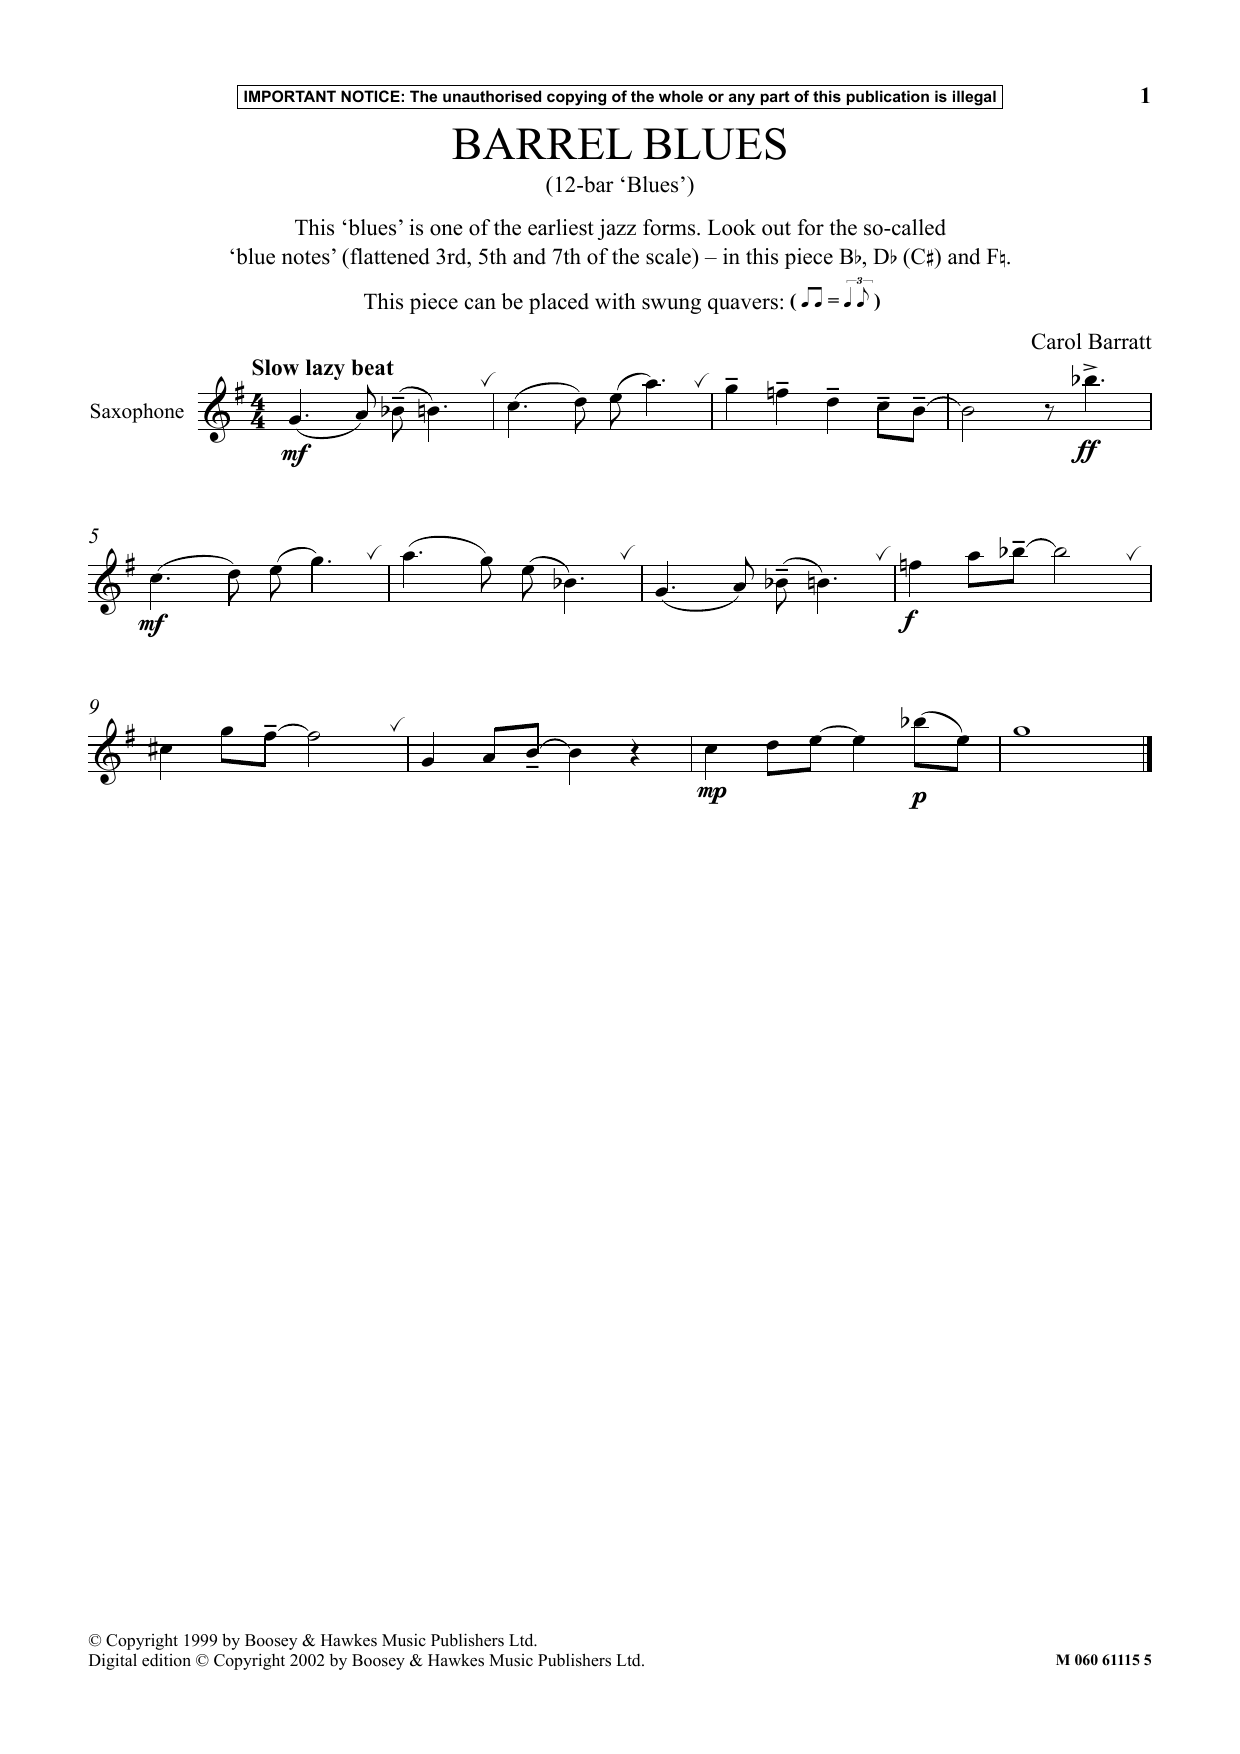 Carol Barratt Barrel Blues Sheet Music Notes & Chords for Instrumental Solo - Download or Print PDF